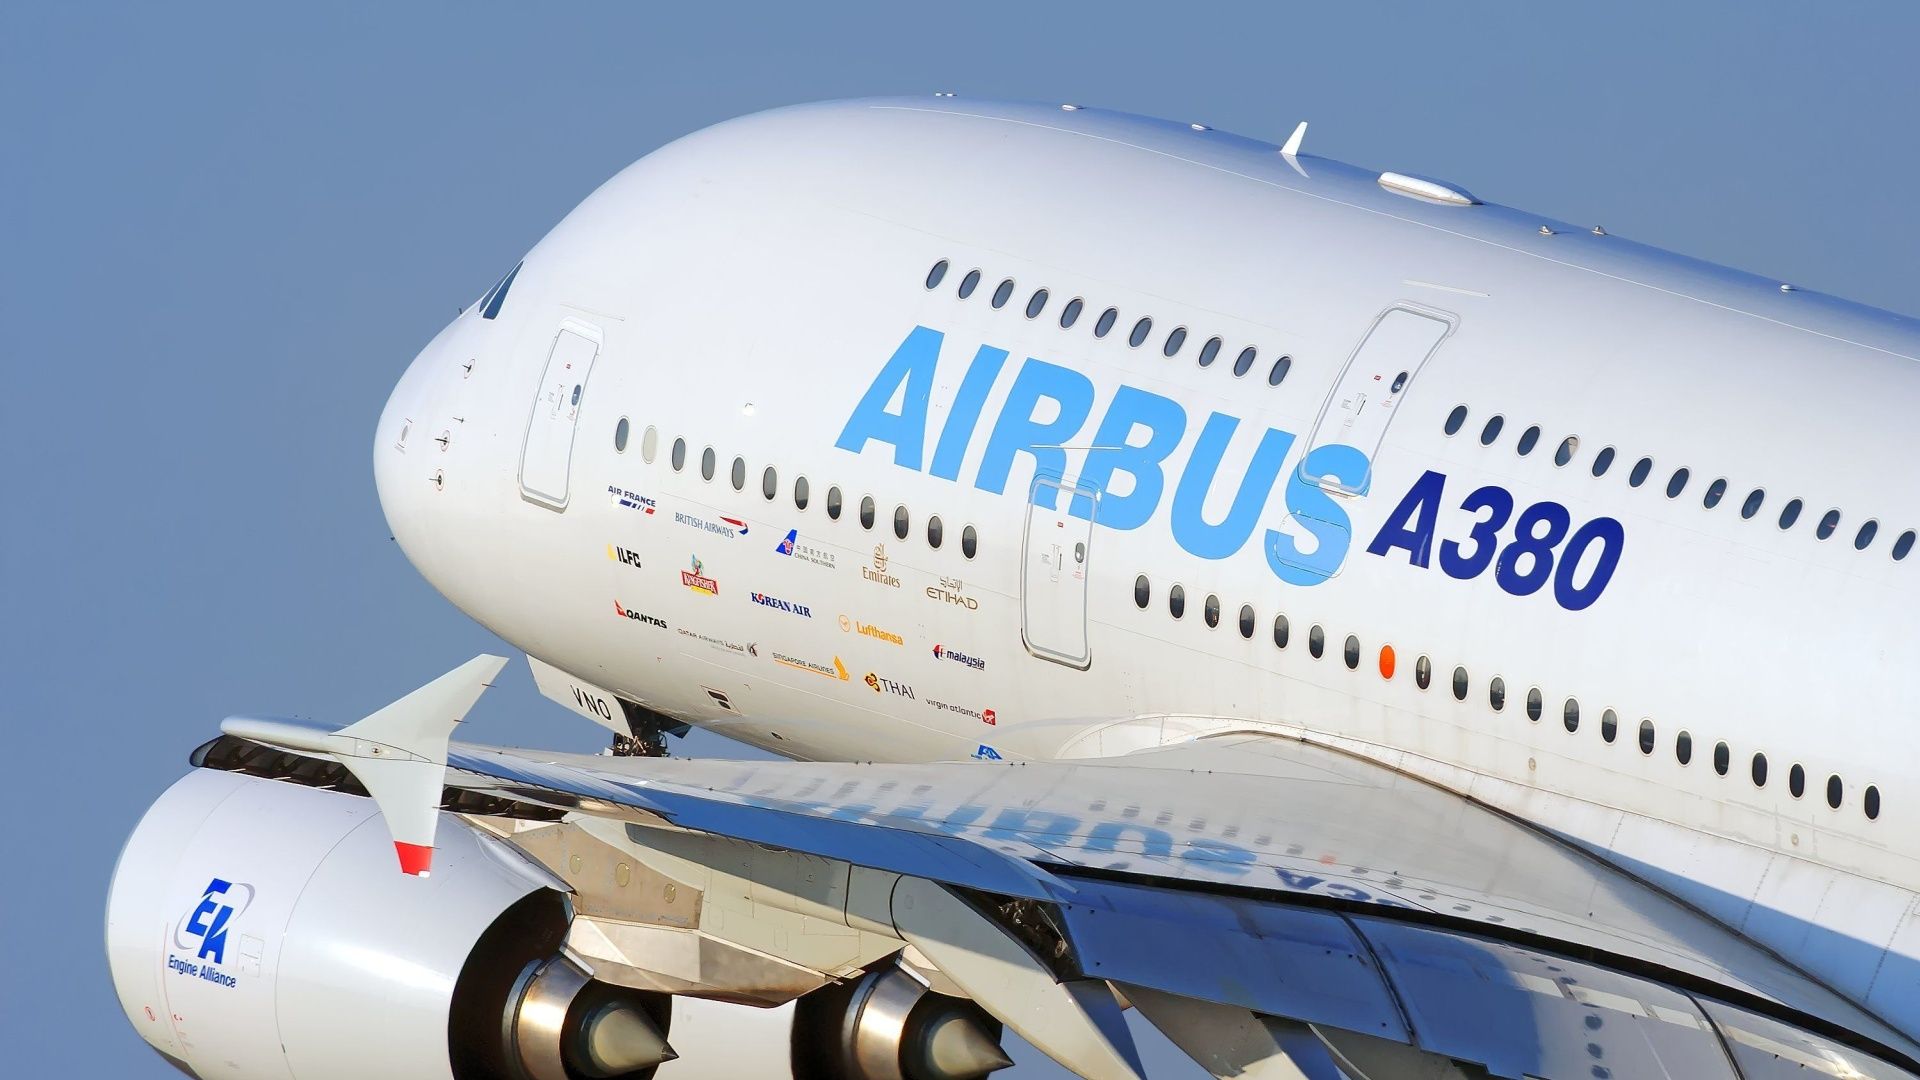 Airbus A380 Shutterstock_486304546 